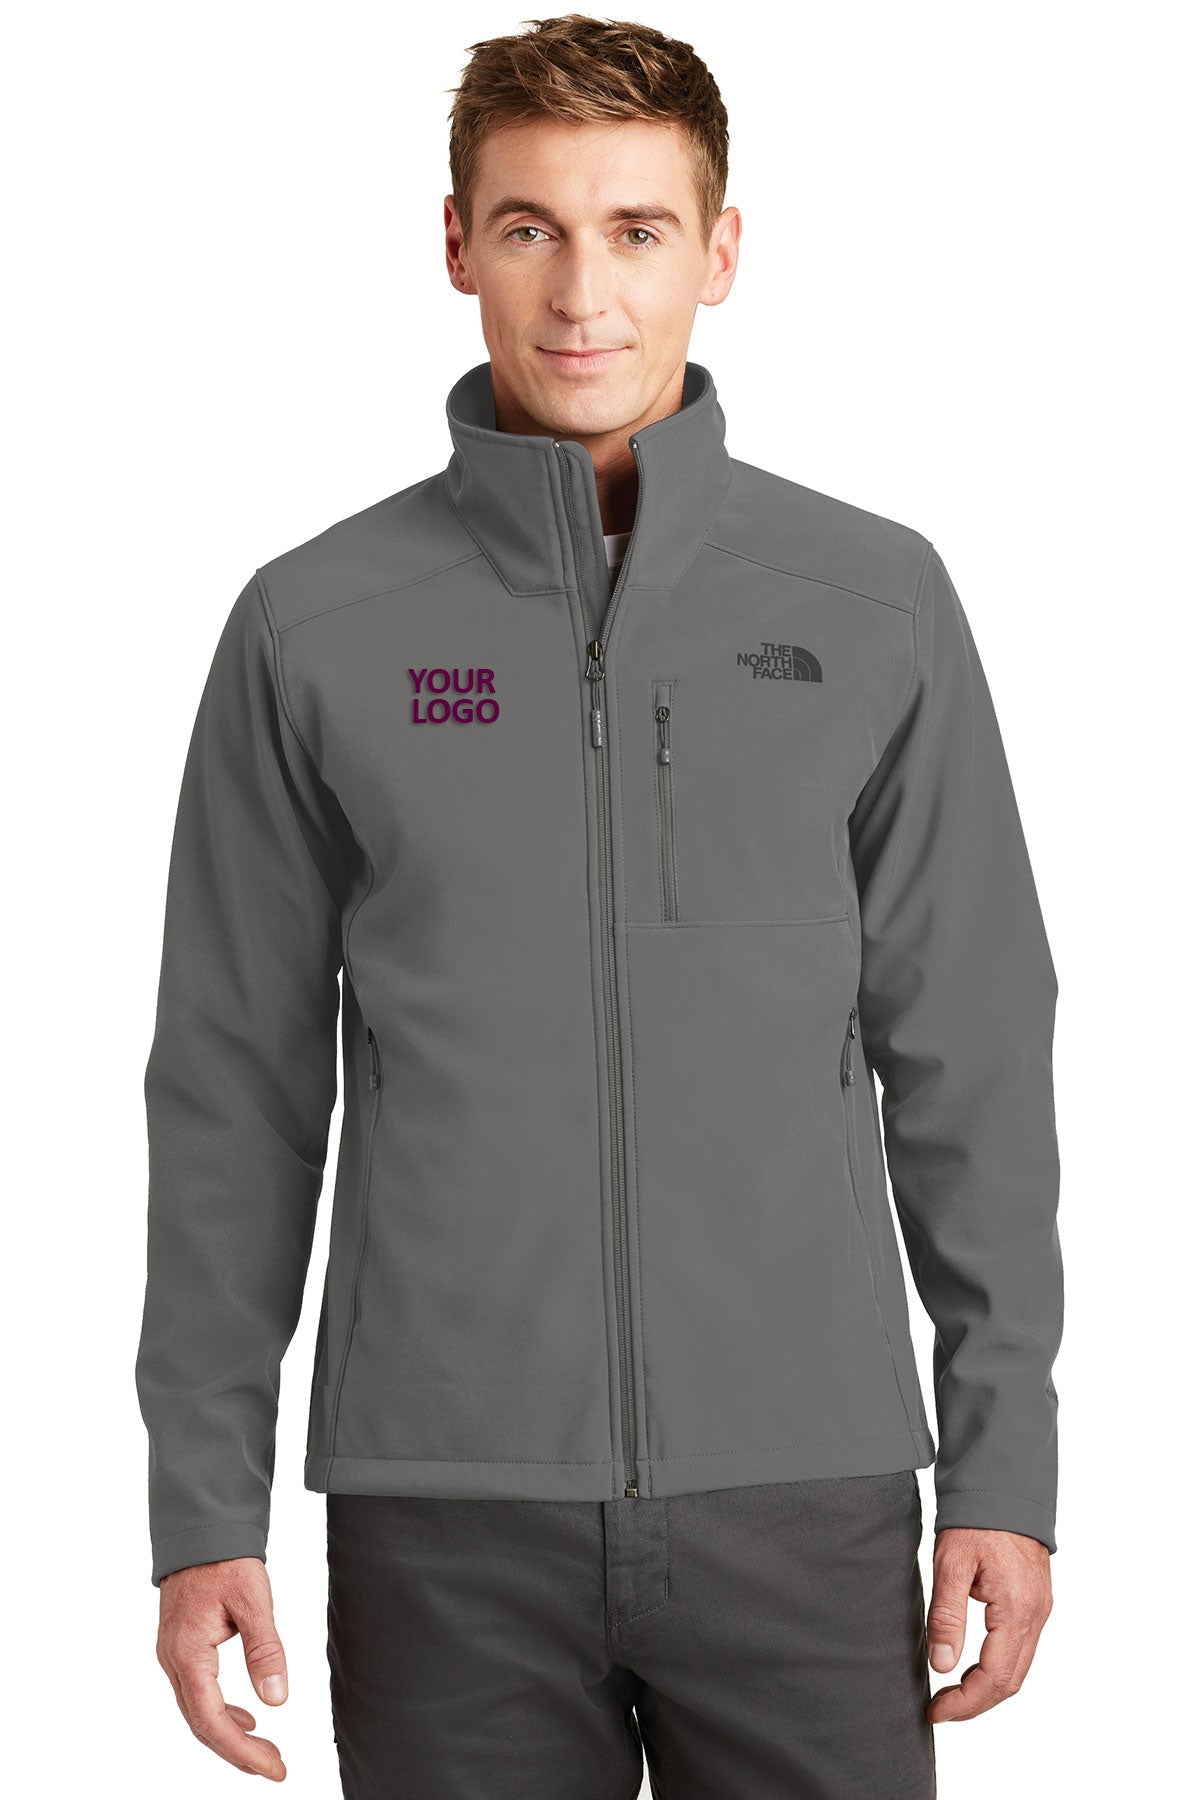 The North Face Asphalt Grey NF0A3LGT jacket company logo